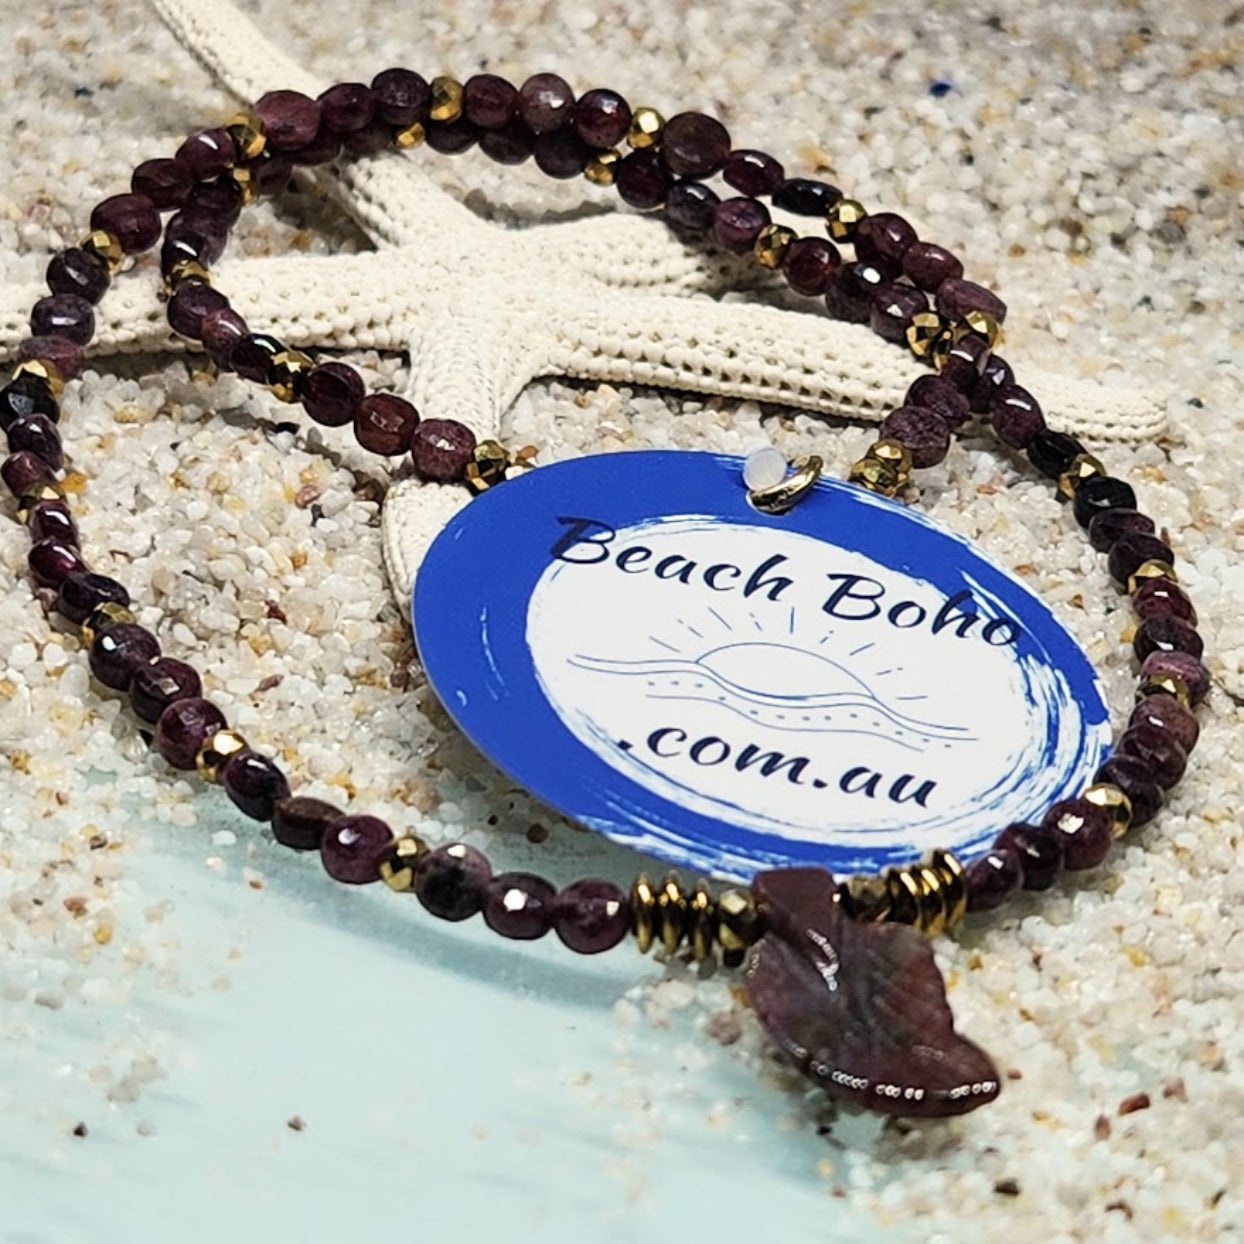 RED LEAVES - GARNET GOLD HEMITITE NECKLACE - Premium necklaces from www.beachboho.com.au - Just $65! Shop now at www.beachboho.com.au